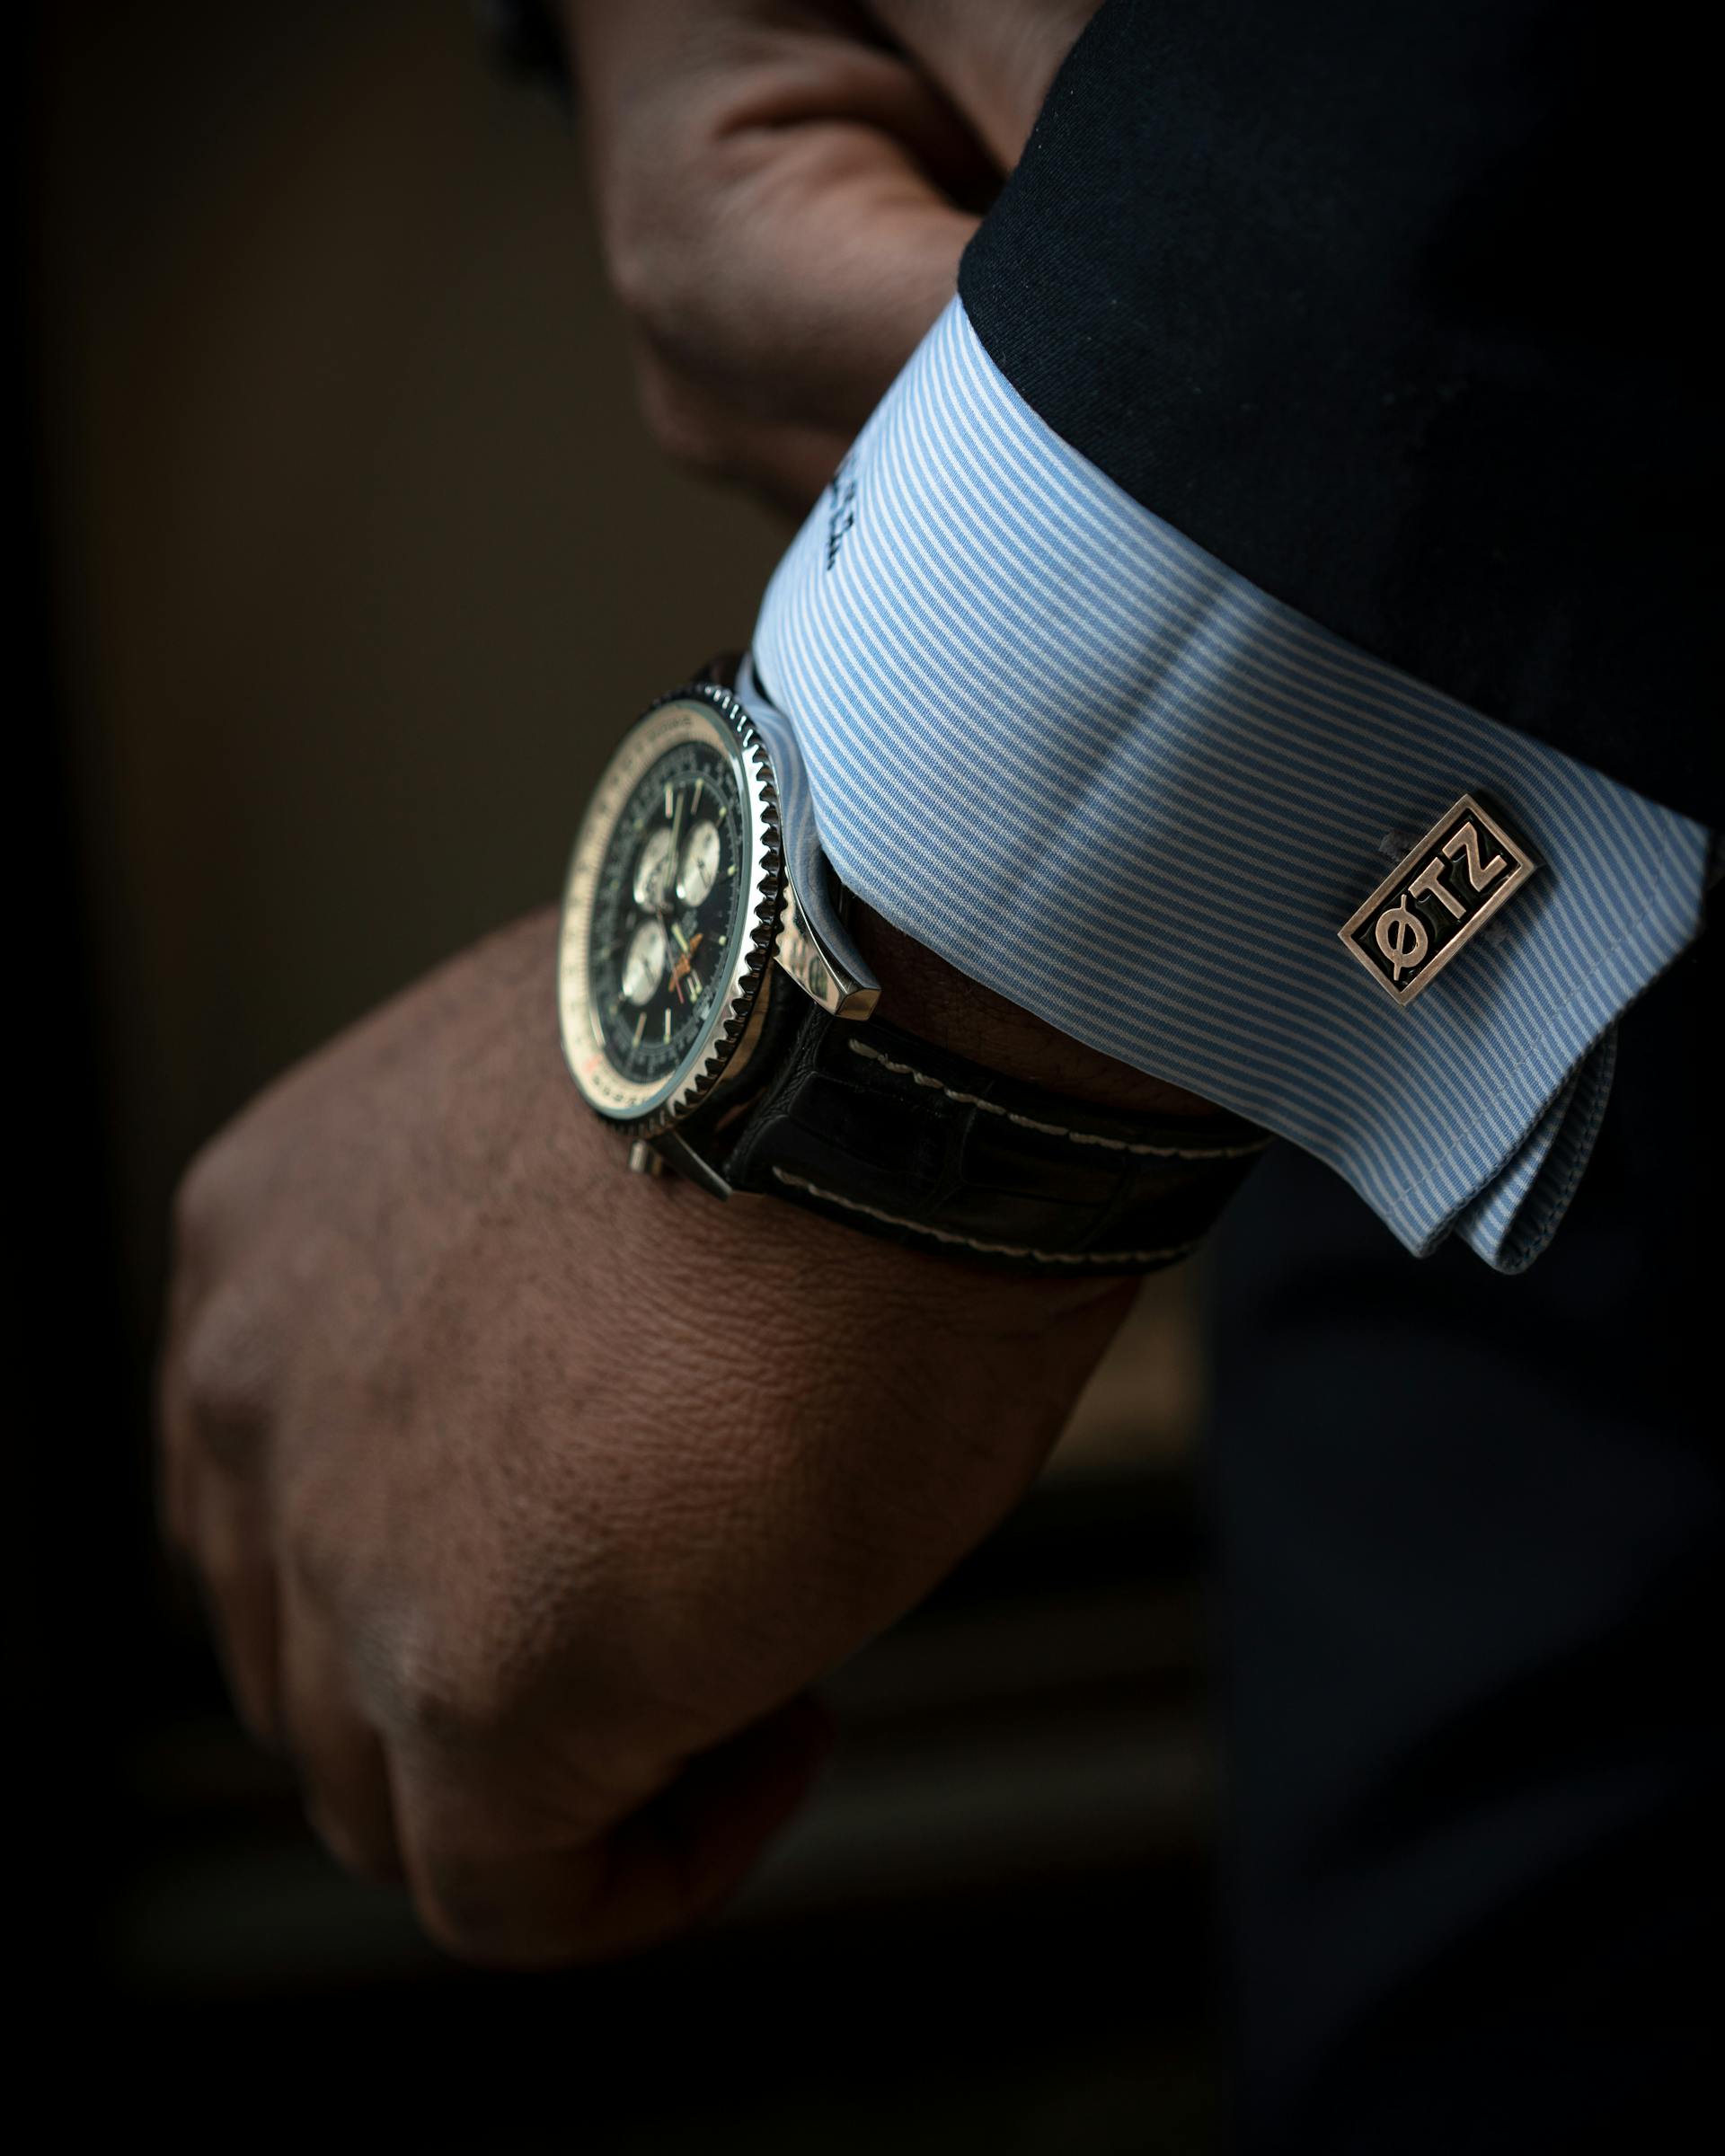 A man wearing a wristwatch | Source: Pexels